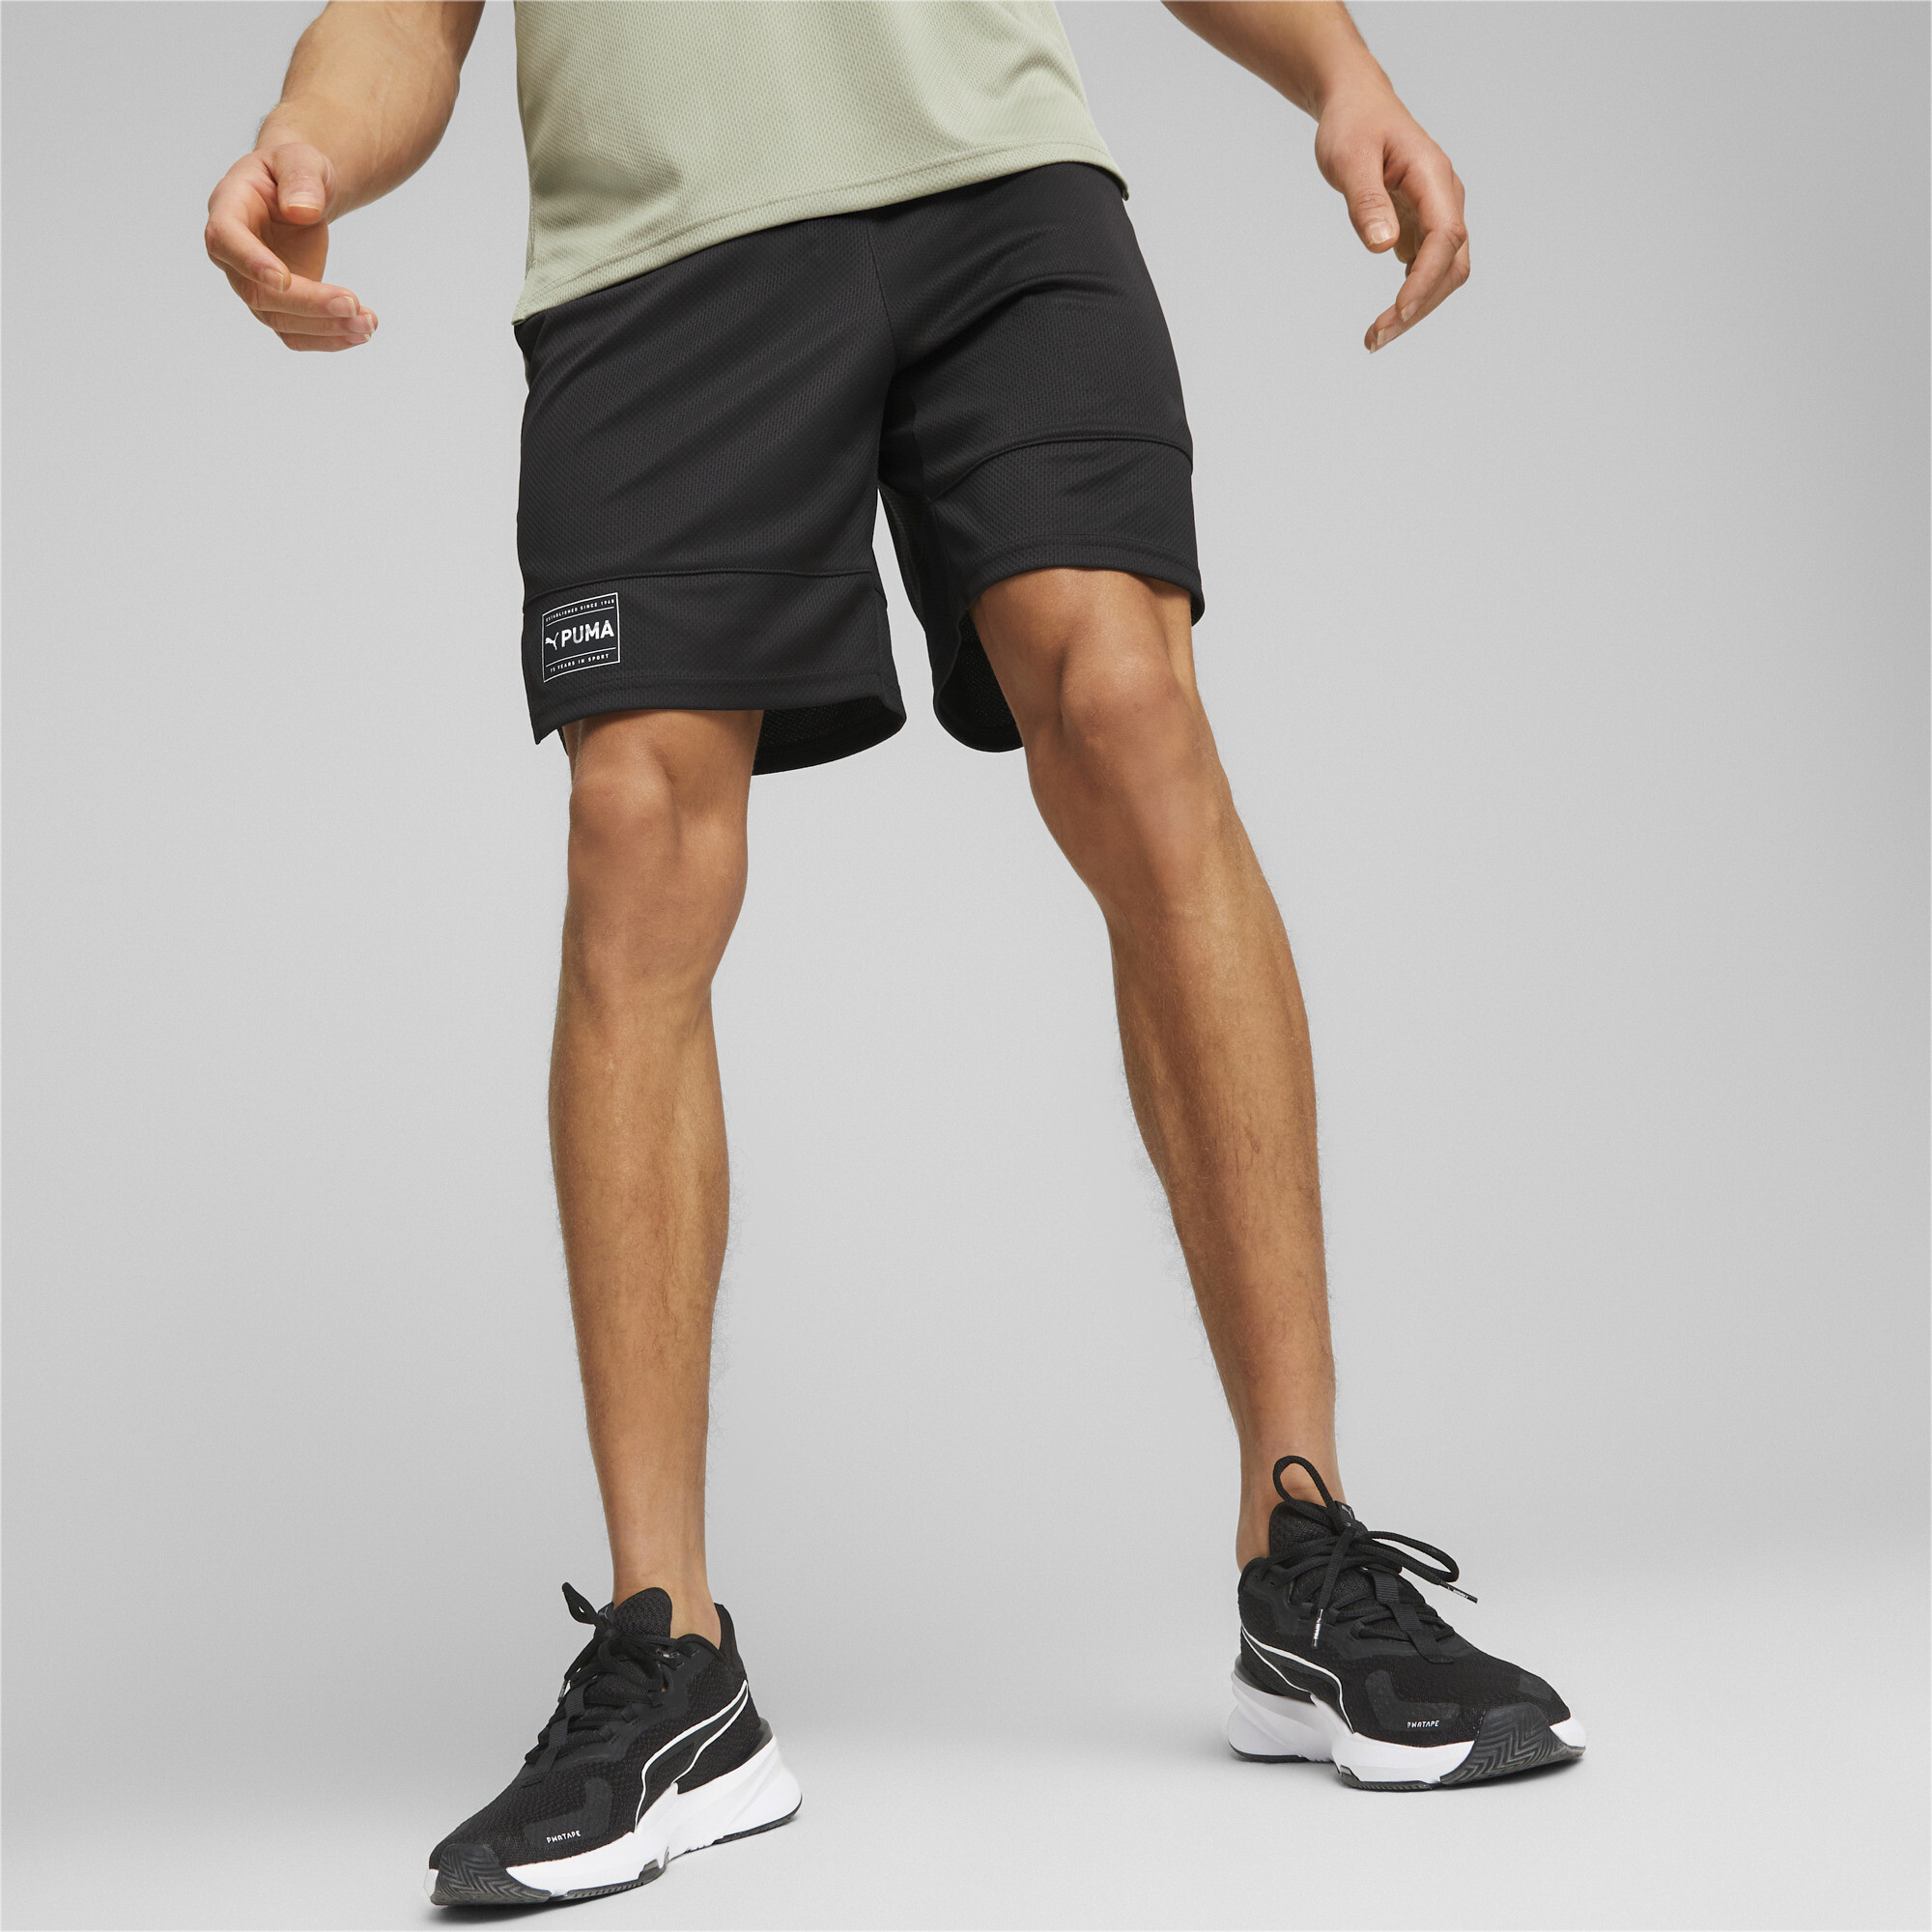 Men's PUMA Fit Ultrabreathe Training Shorts Men In Black, Size Medium